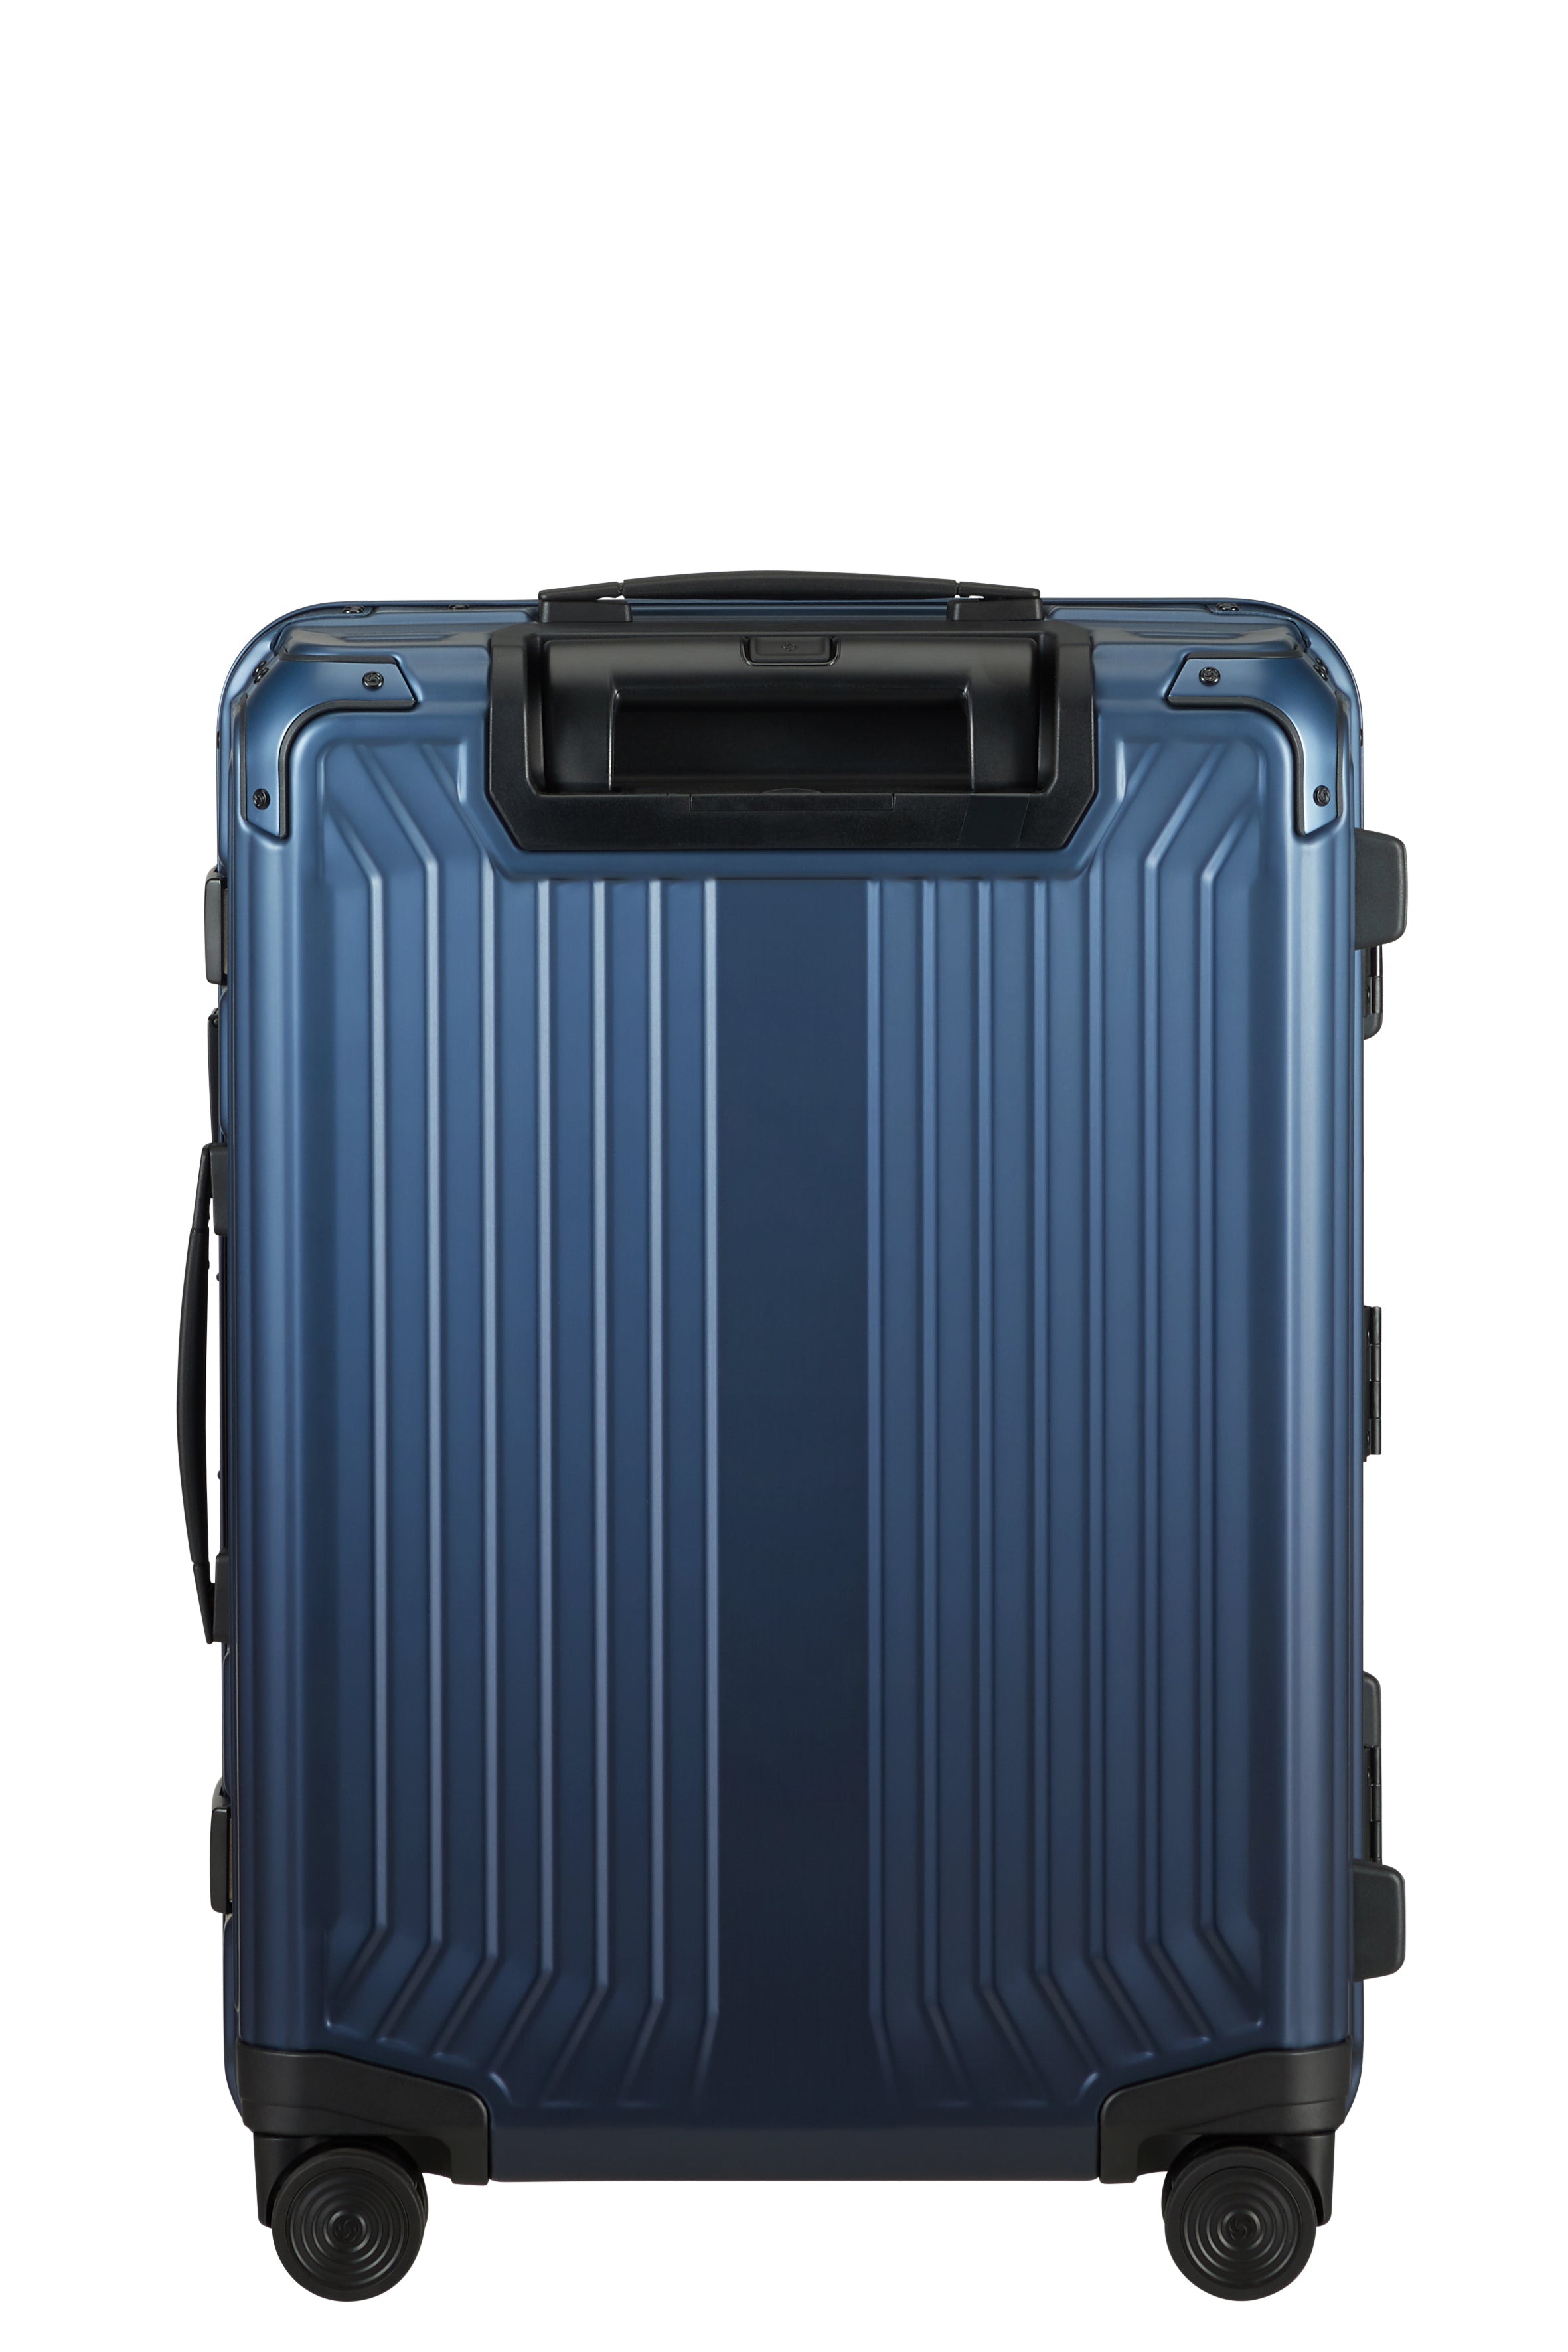 Samsonite - Lite Box ALU 55cm Small 4 Wheel Hard Suitcase - Gradient Midnight-4